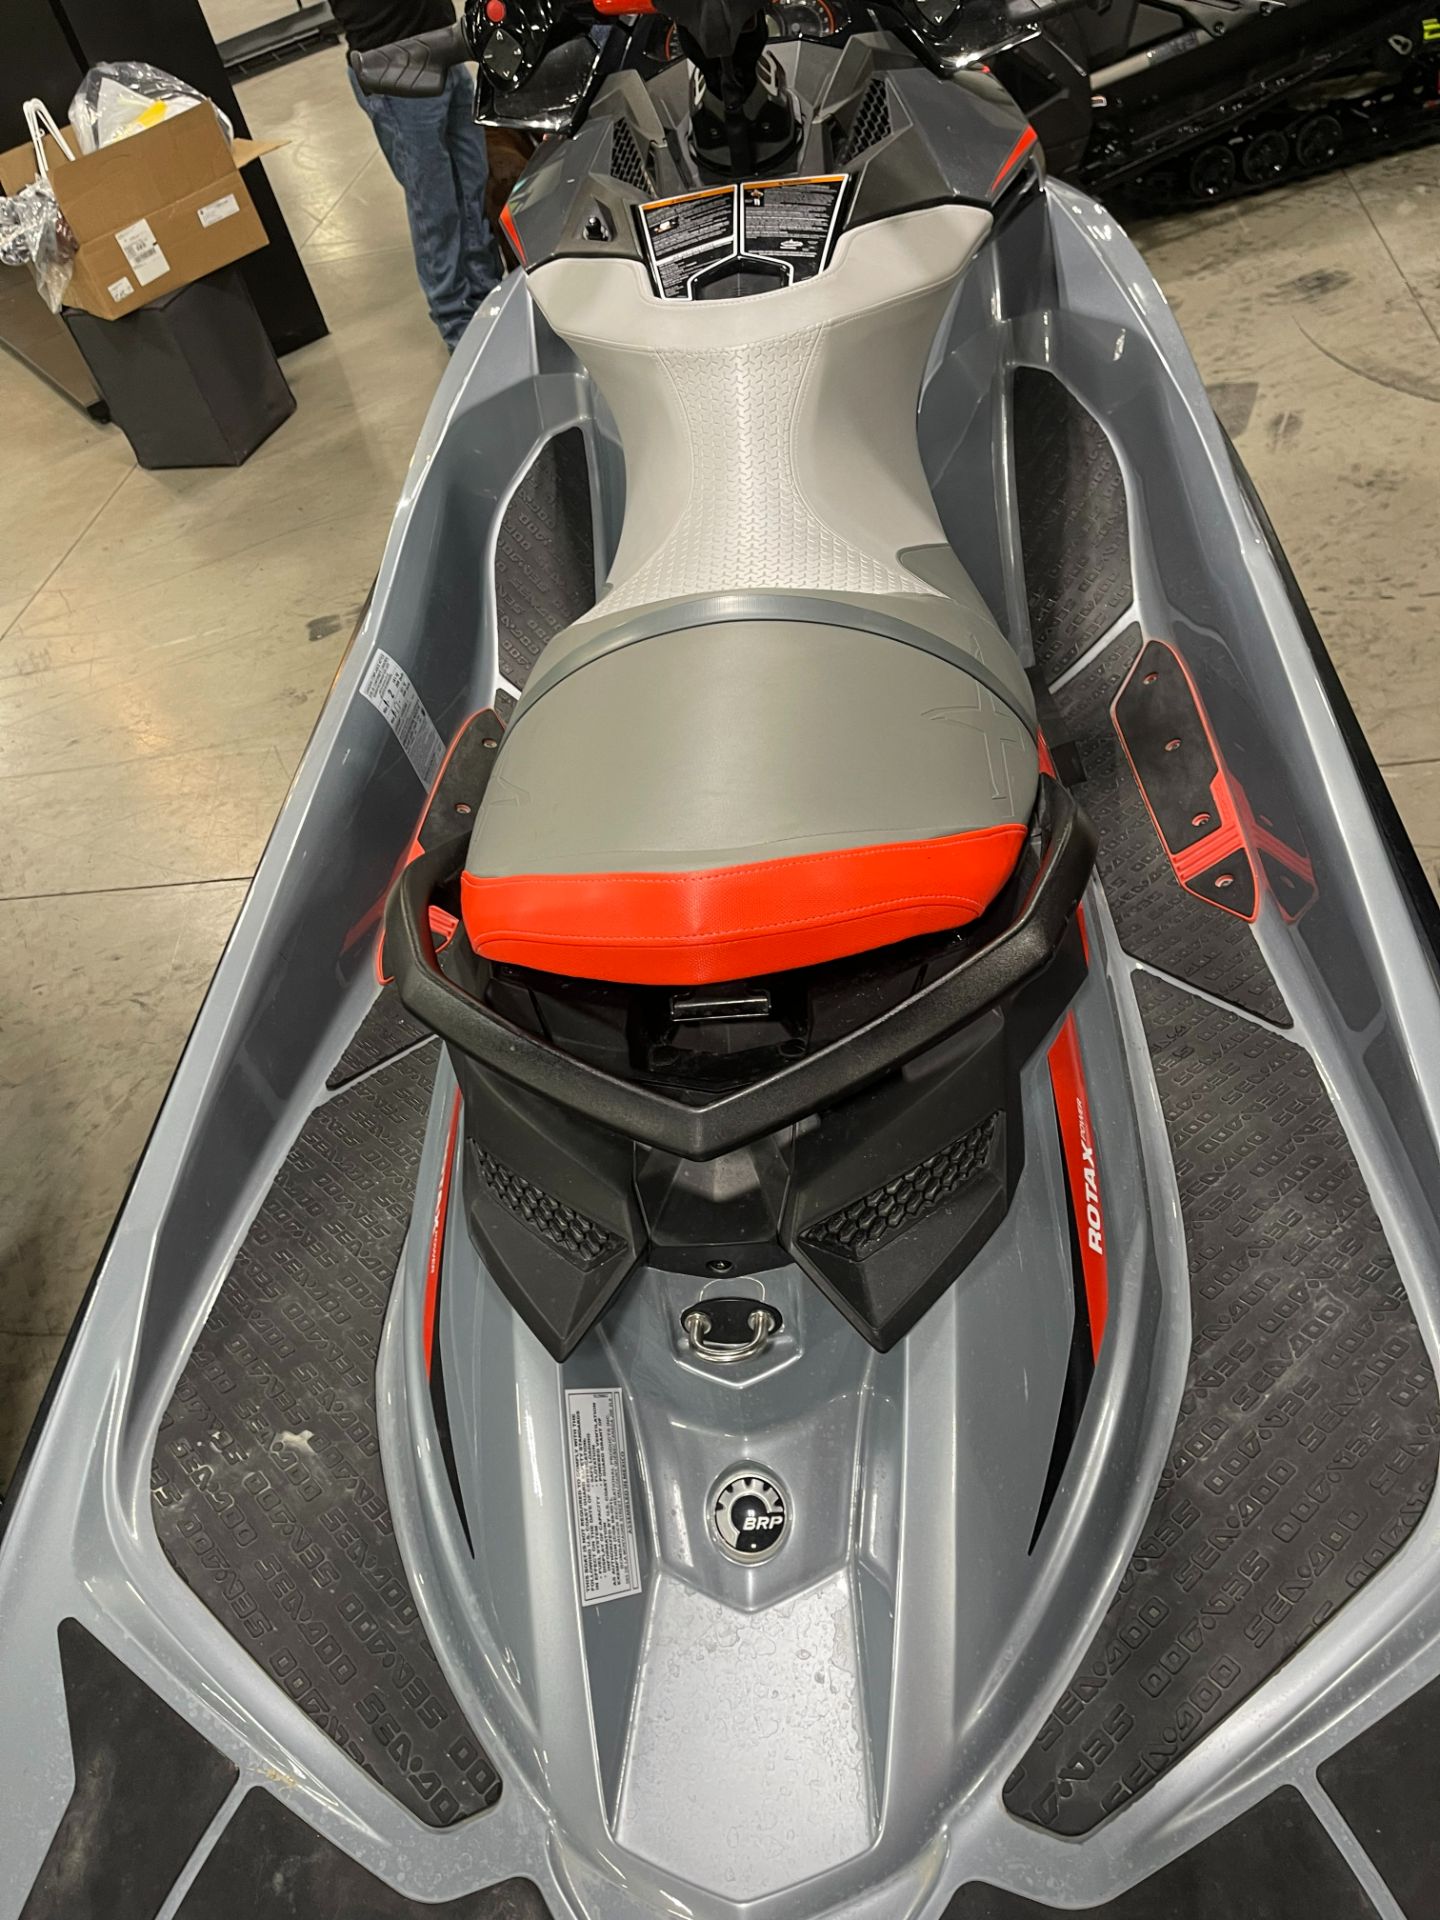 2018 Sea-Doo RXP-X 300 in Huron, Ohio - Photo 4